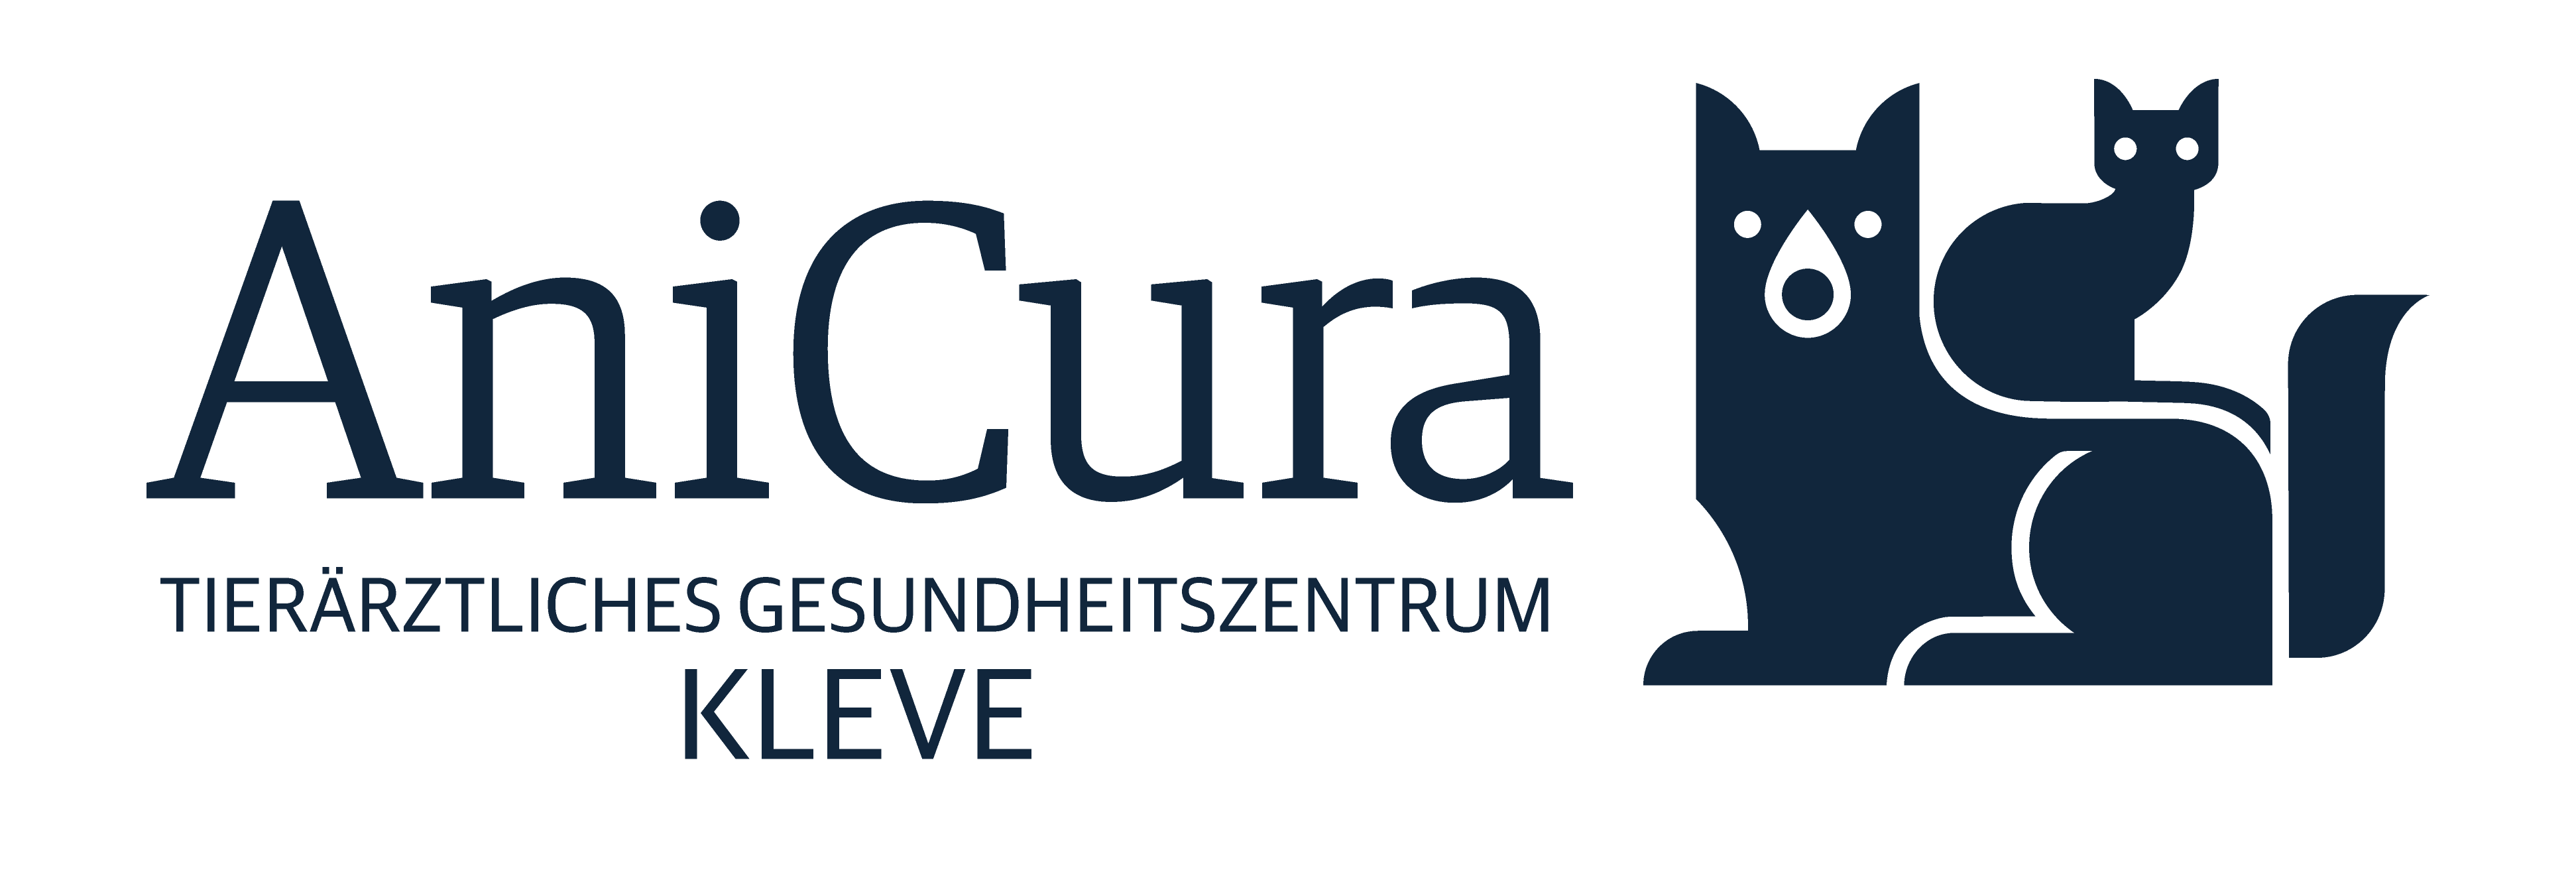 AniCura Veterinair Gezondheidscentrum Kleve logo